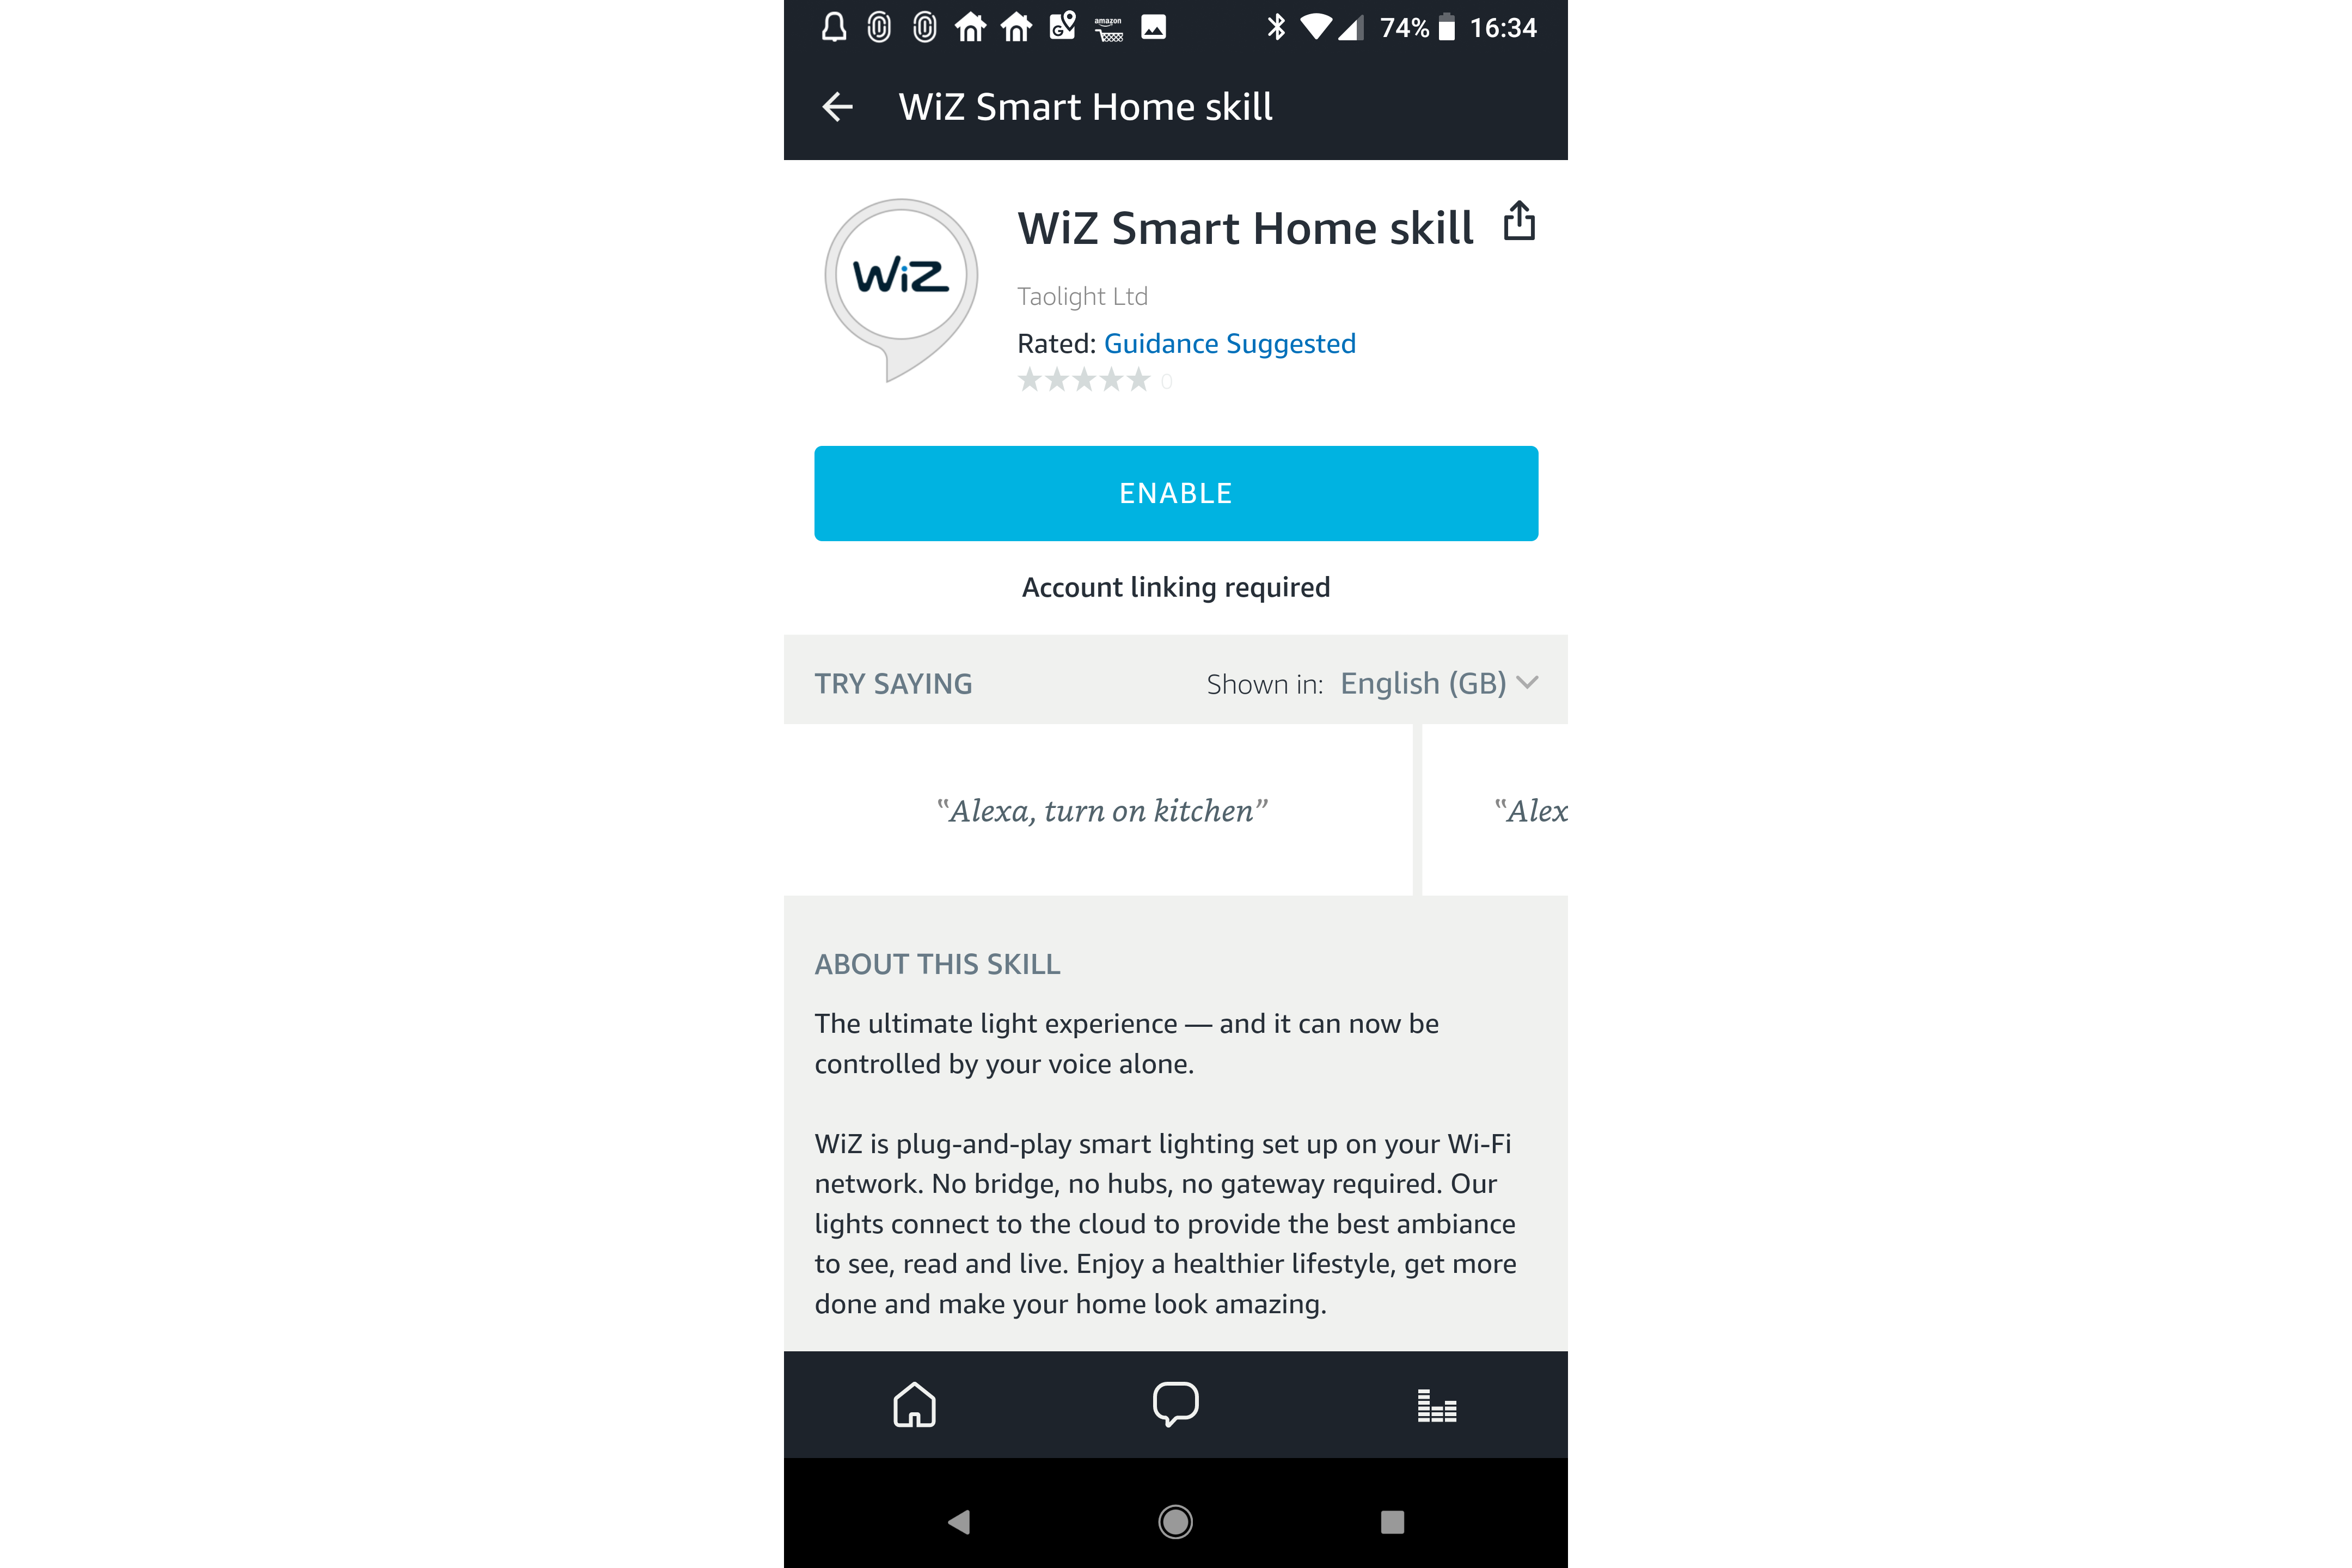 Screenshot of WiZ Smart Home skill interface on a smartphone.